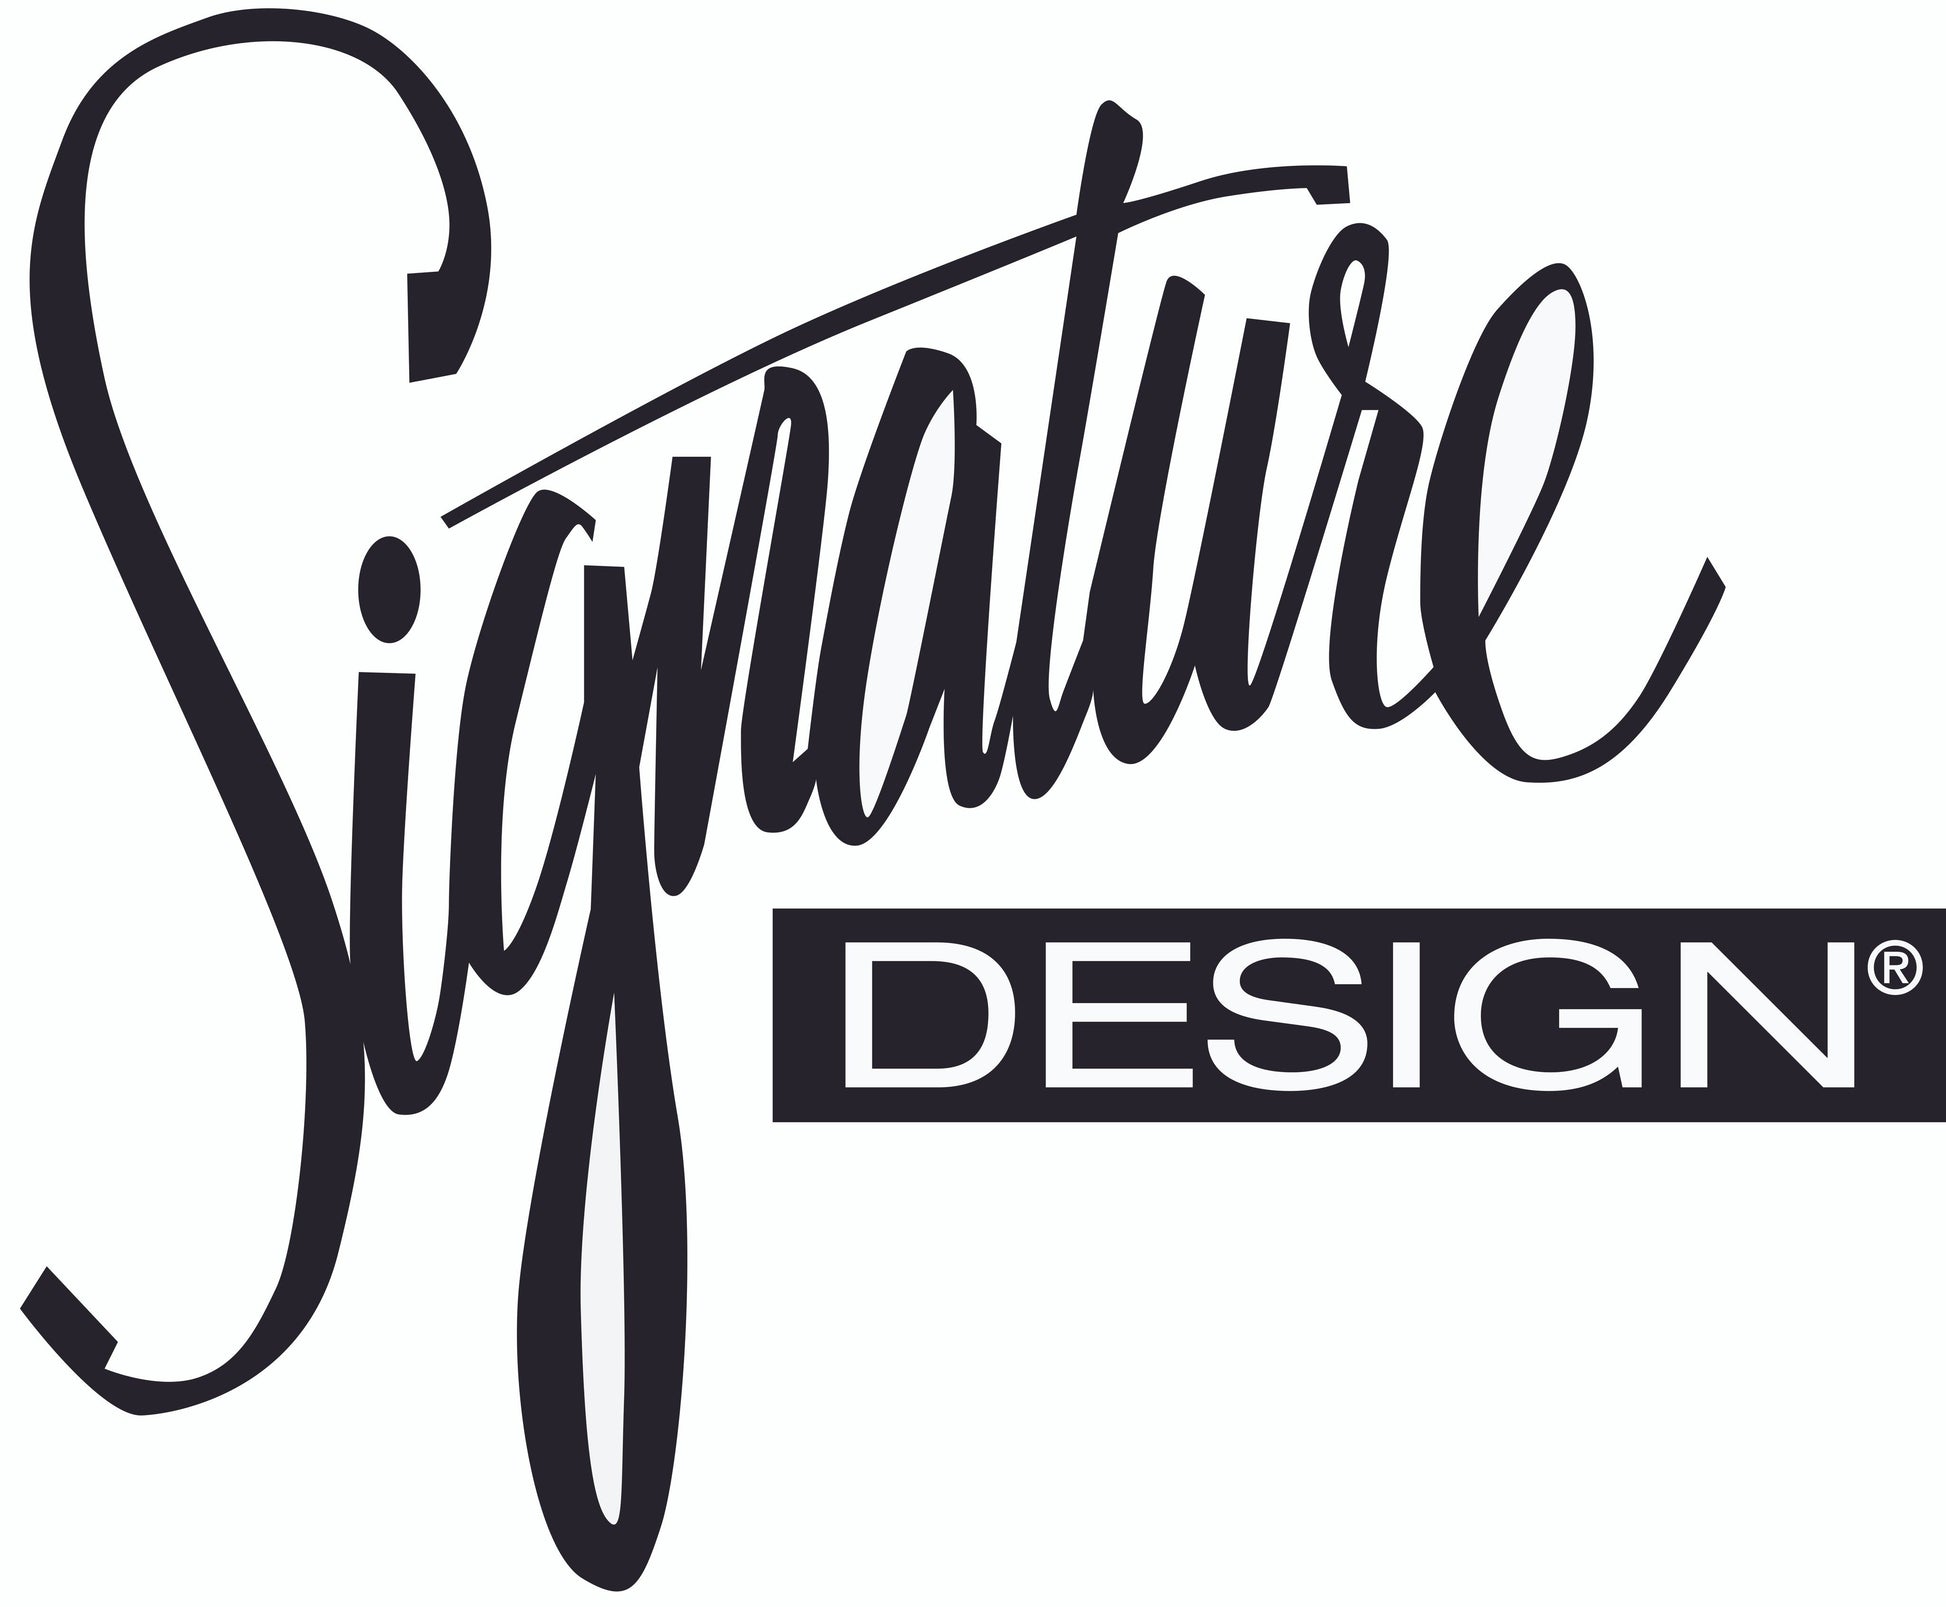 Trasimeno Sofa and Loveseat Signature Design by Ashley®